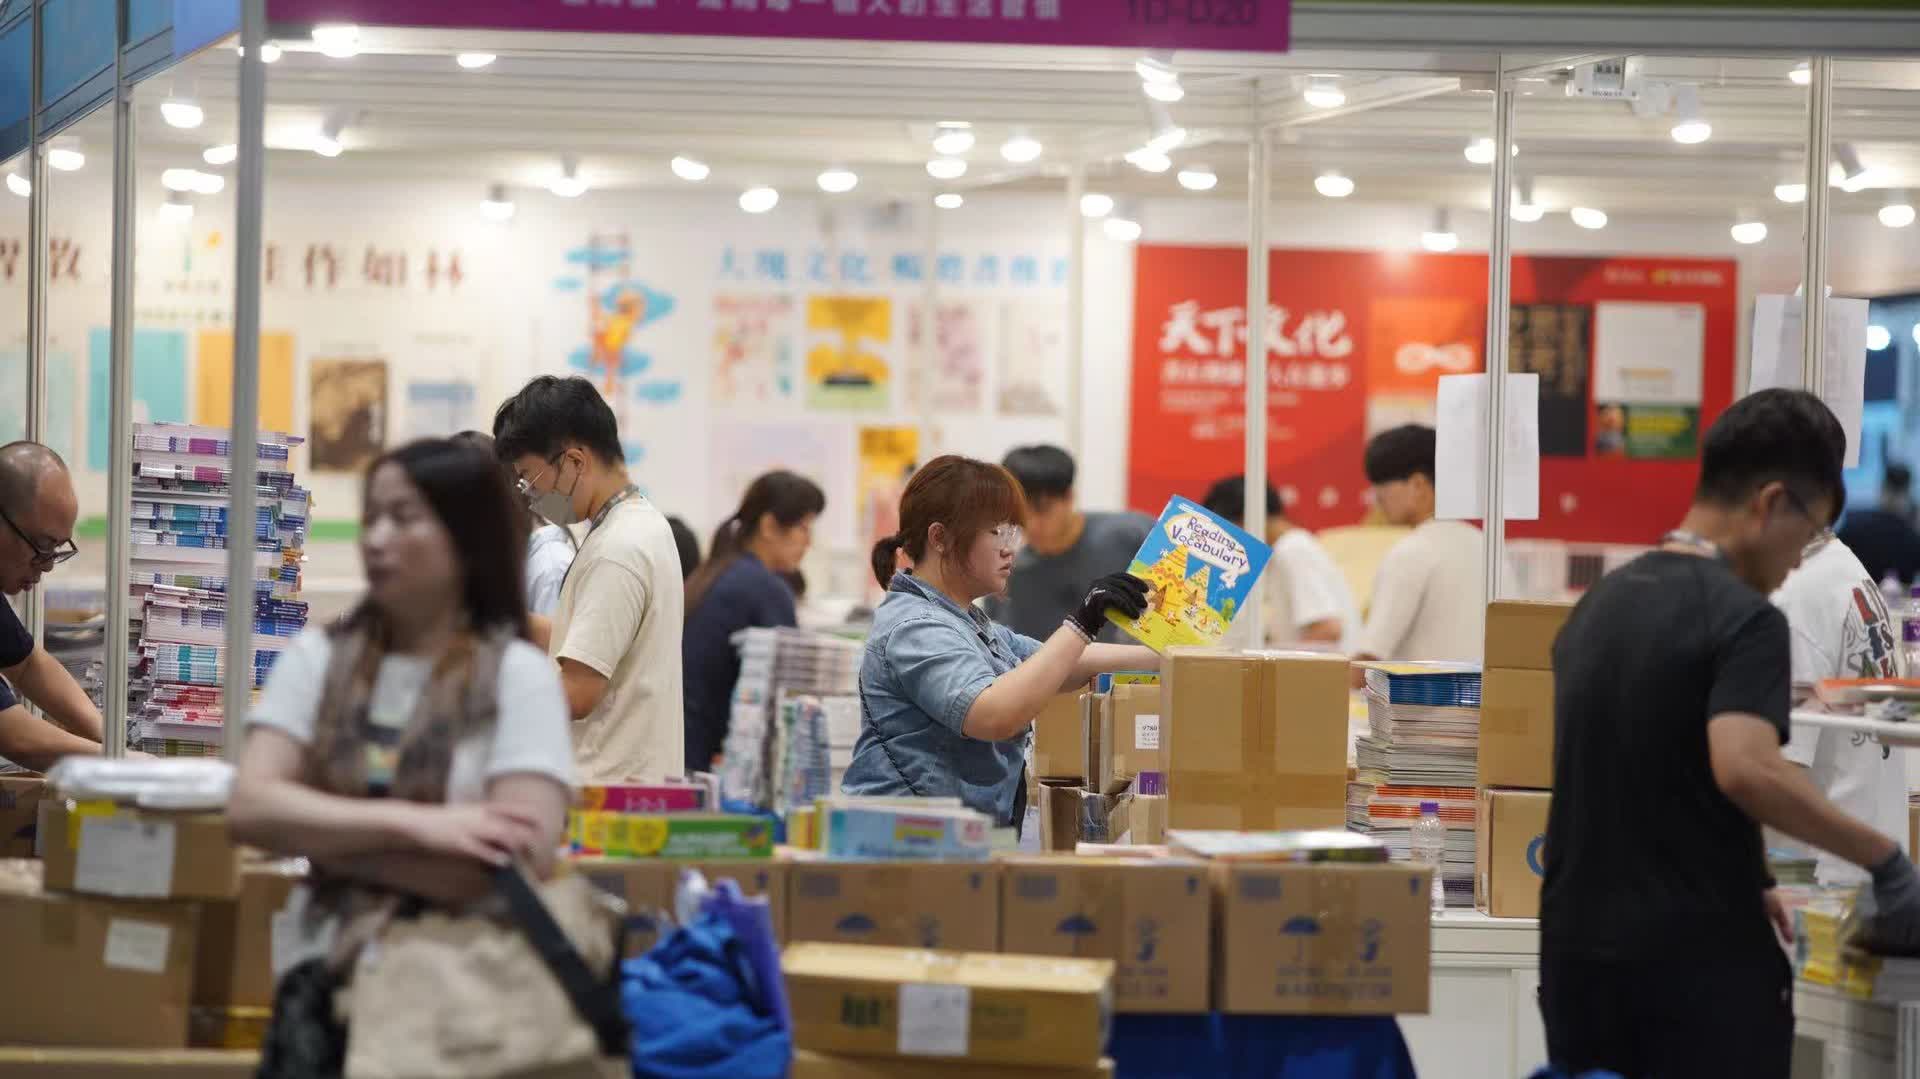 Hong Kong Book Fair sees long queues for entry